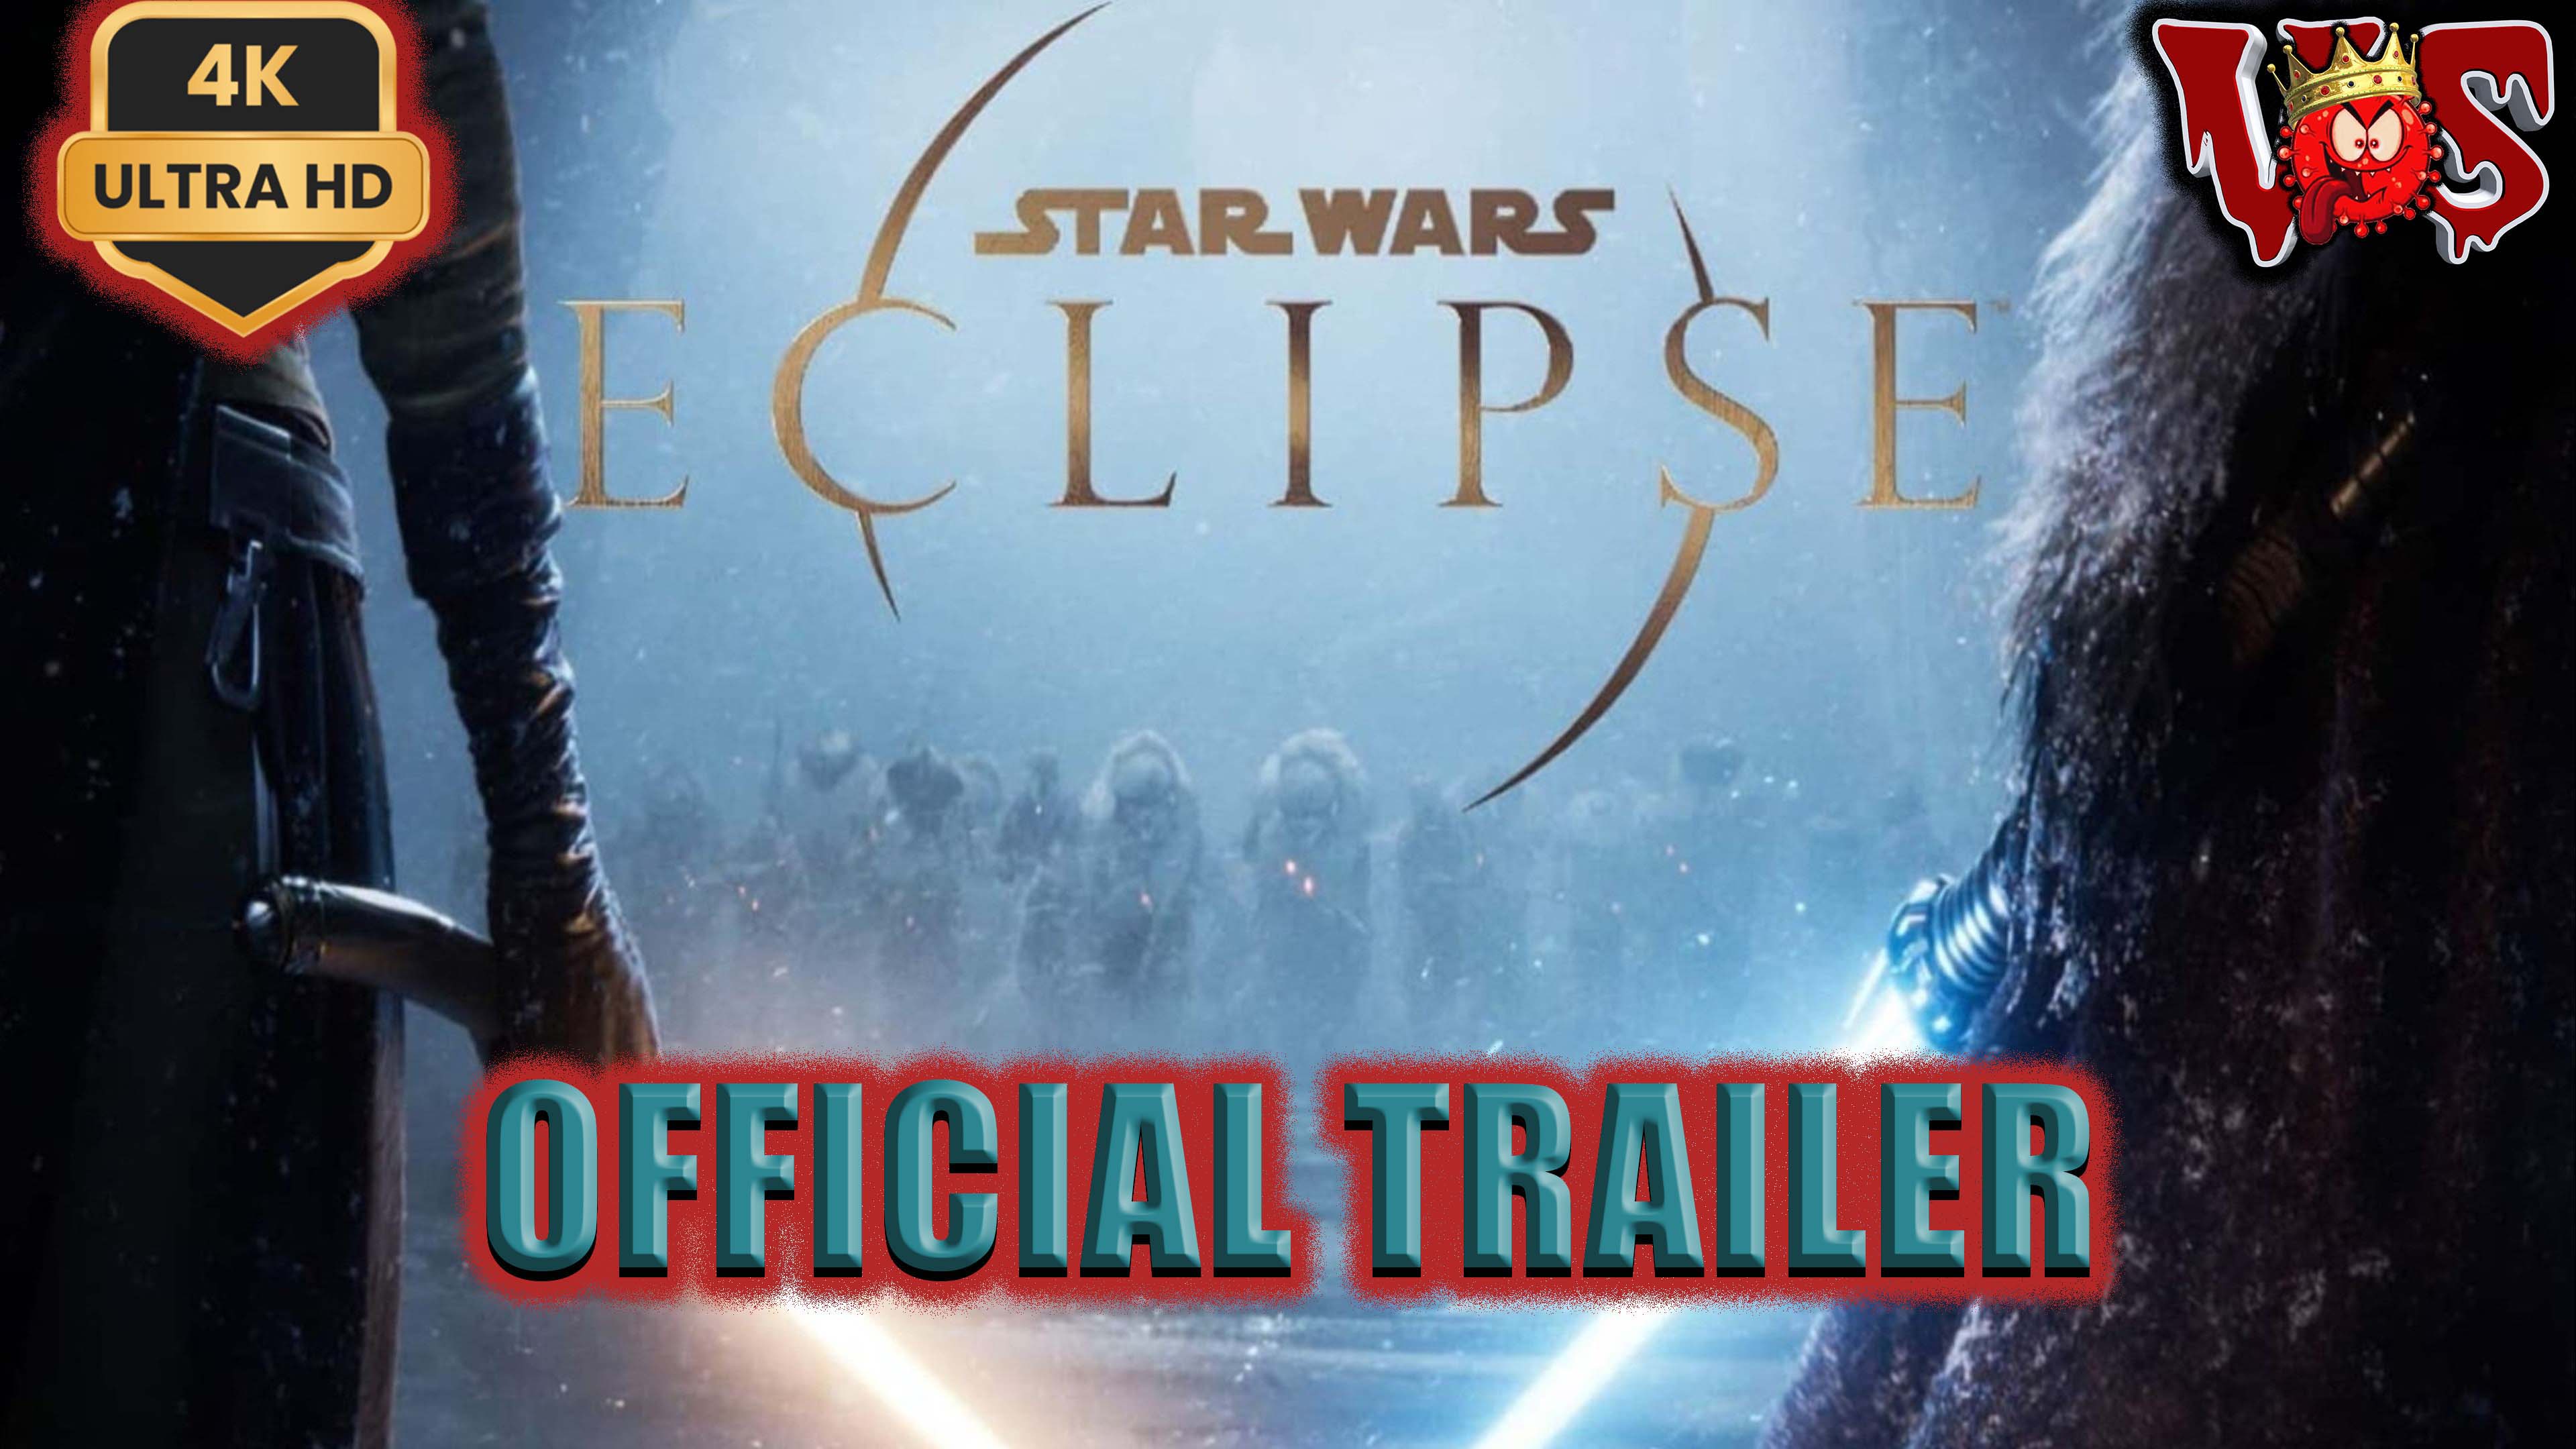 Star Wars Eclipse ➤ Официальный трейлер 💥 4K-UHD 💥